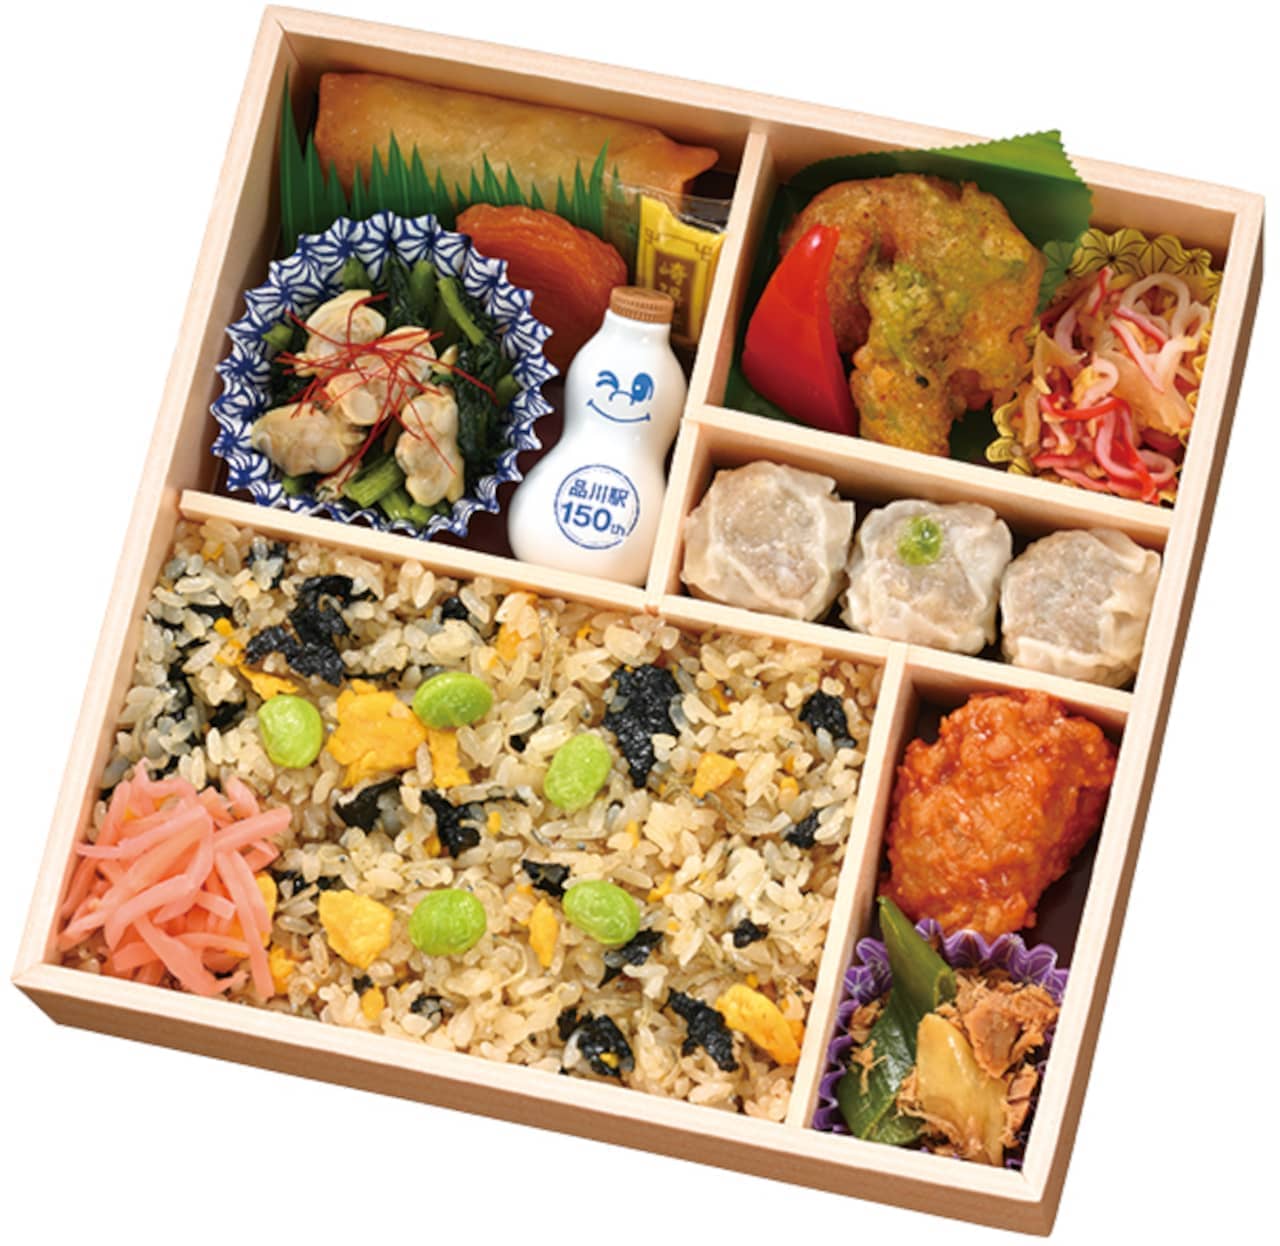 Sakiyo-ken "Shinagawa Station 150th Anniversary Commemorative Lunch Box".